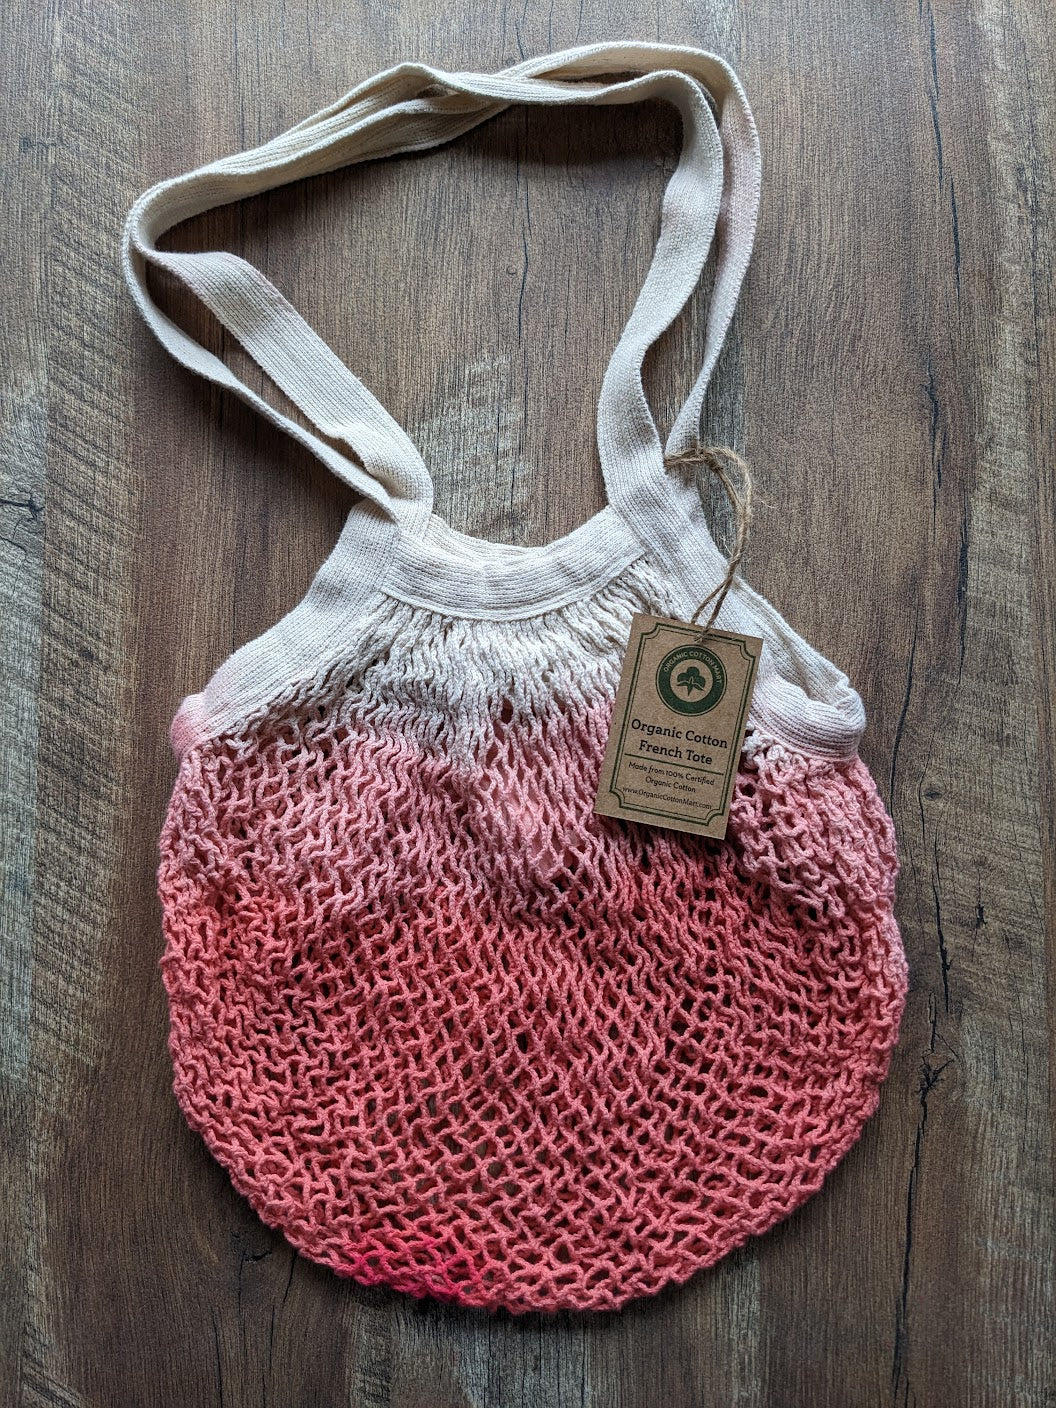 Organic Cotton Market Bag - Hand-dyed